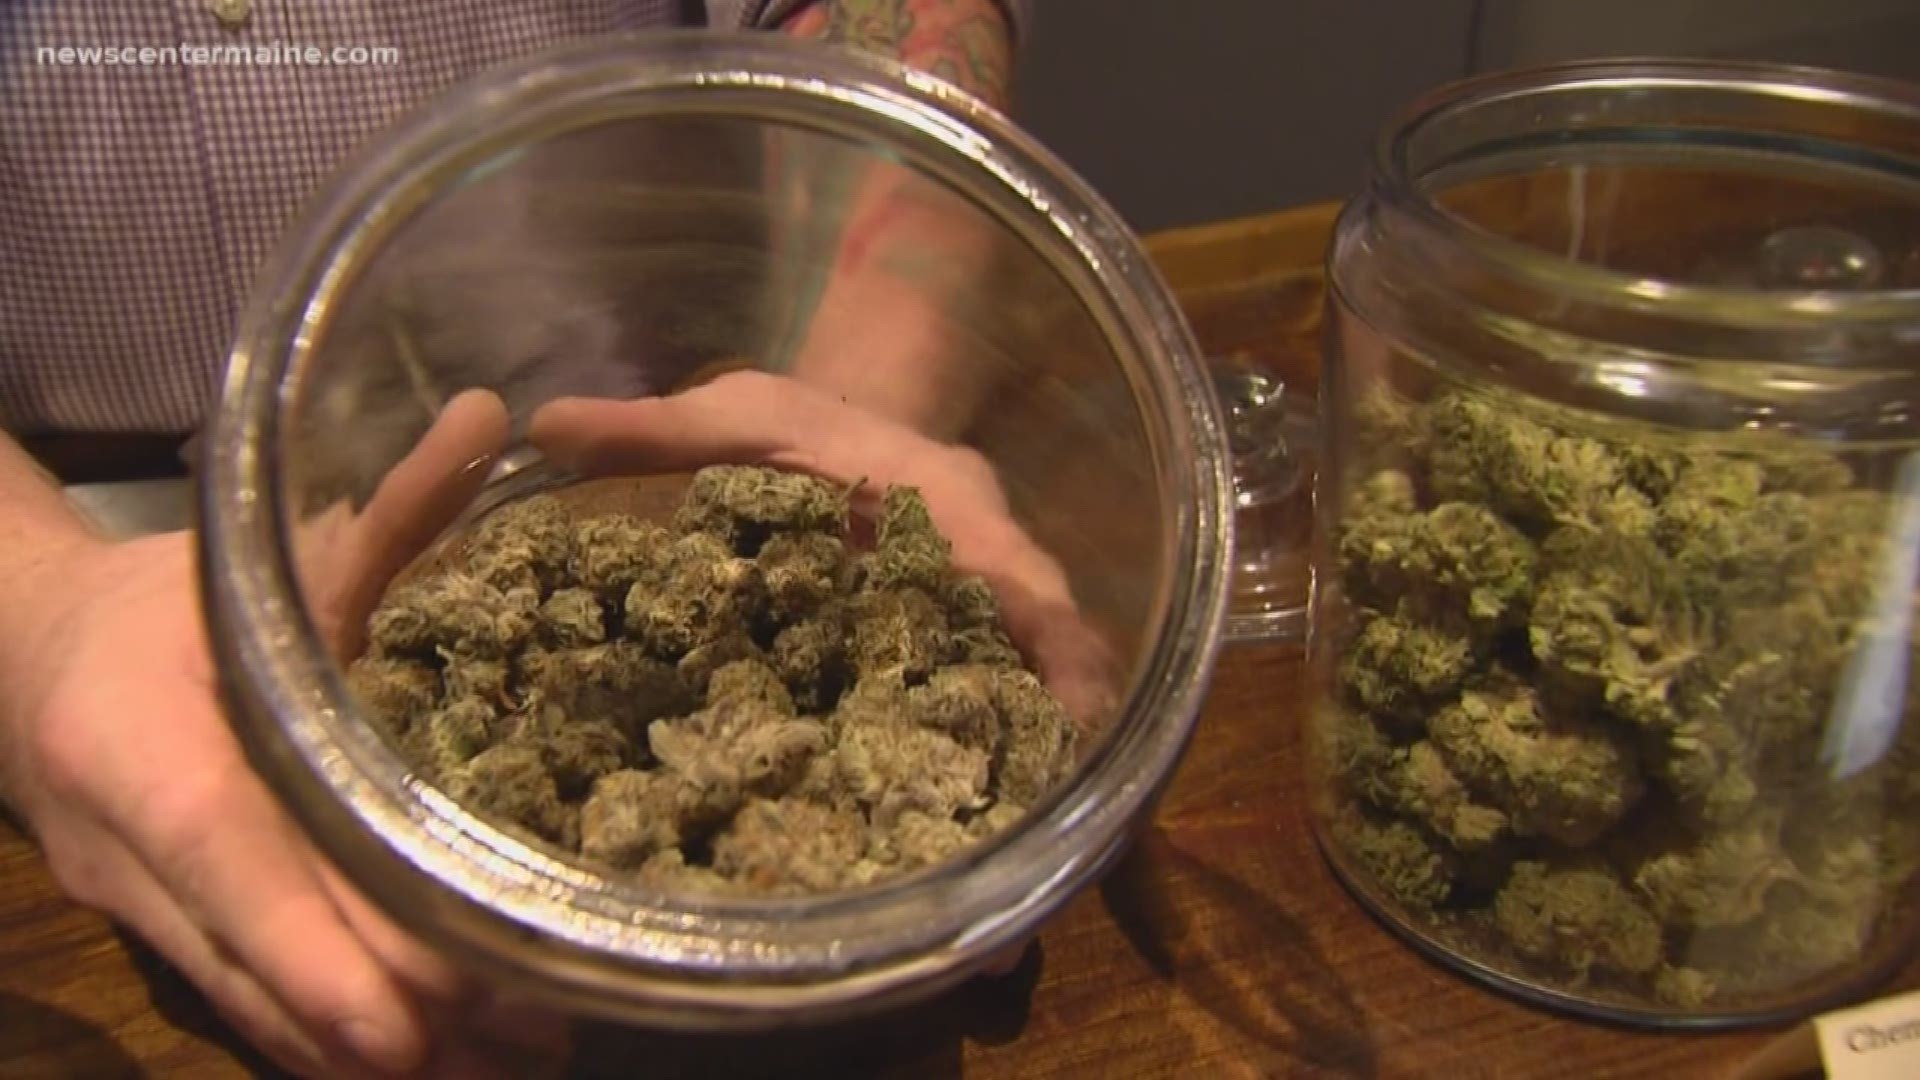 Lawmakers in Portland met Wednesday evening to discuss new marijuana laws and regulations in the city.